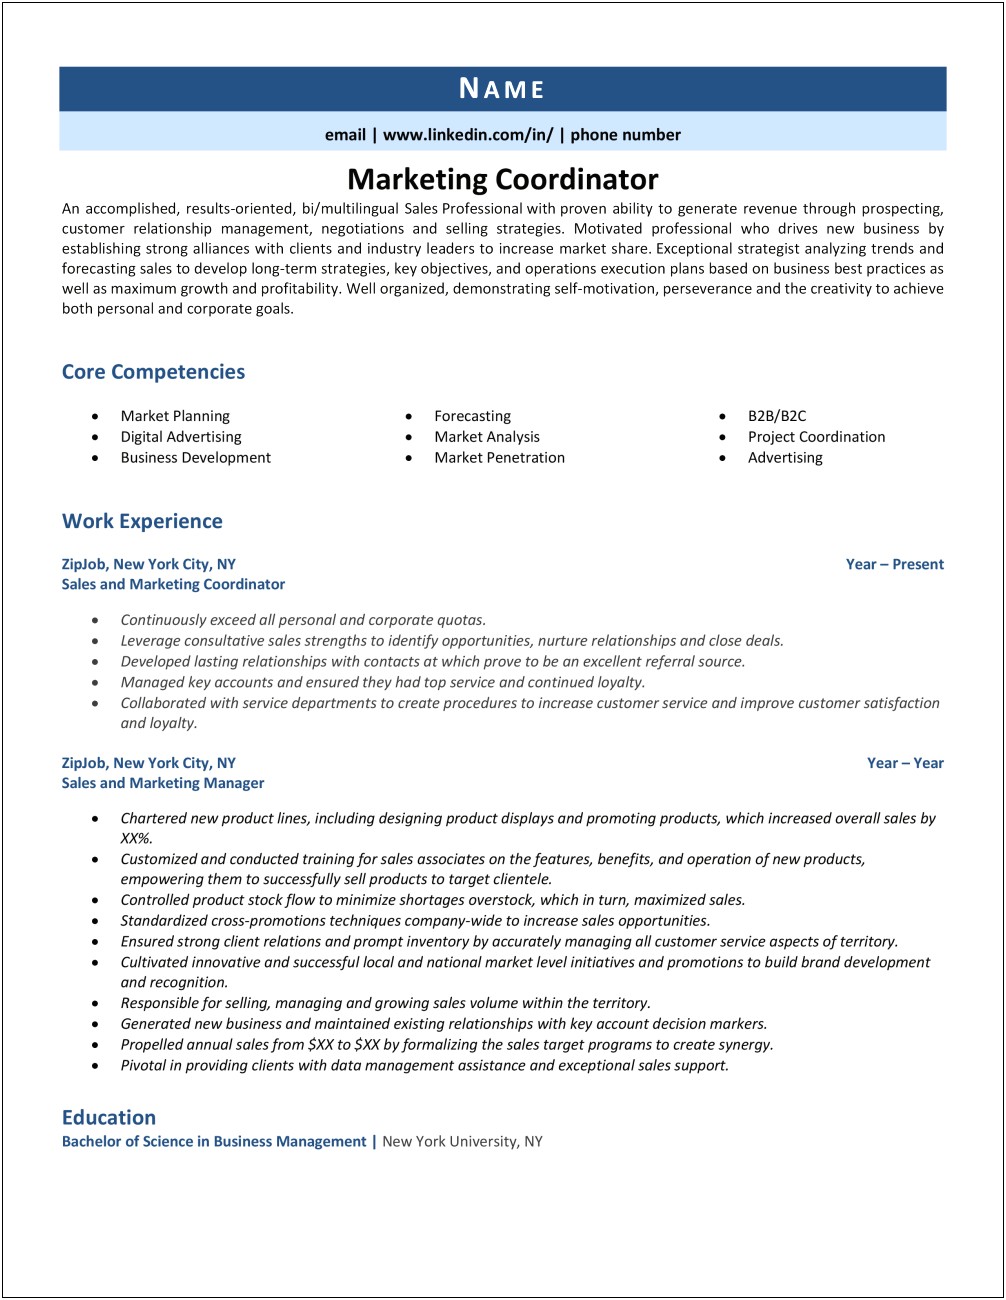 Marketing Coordinator With Three Years Experience Resume